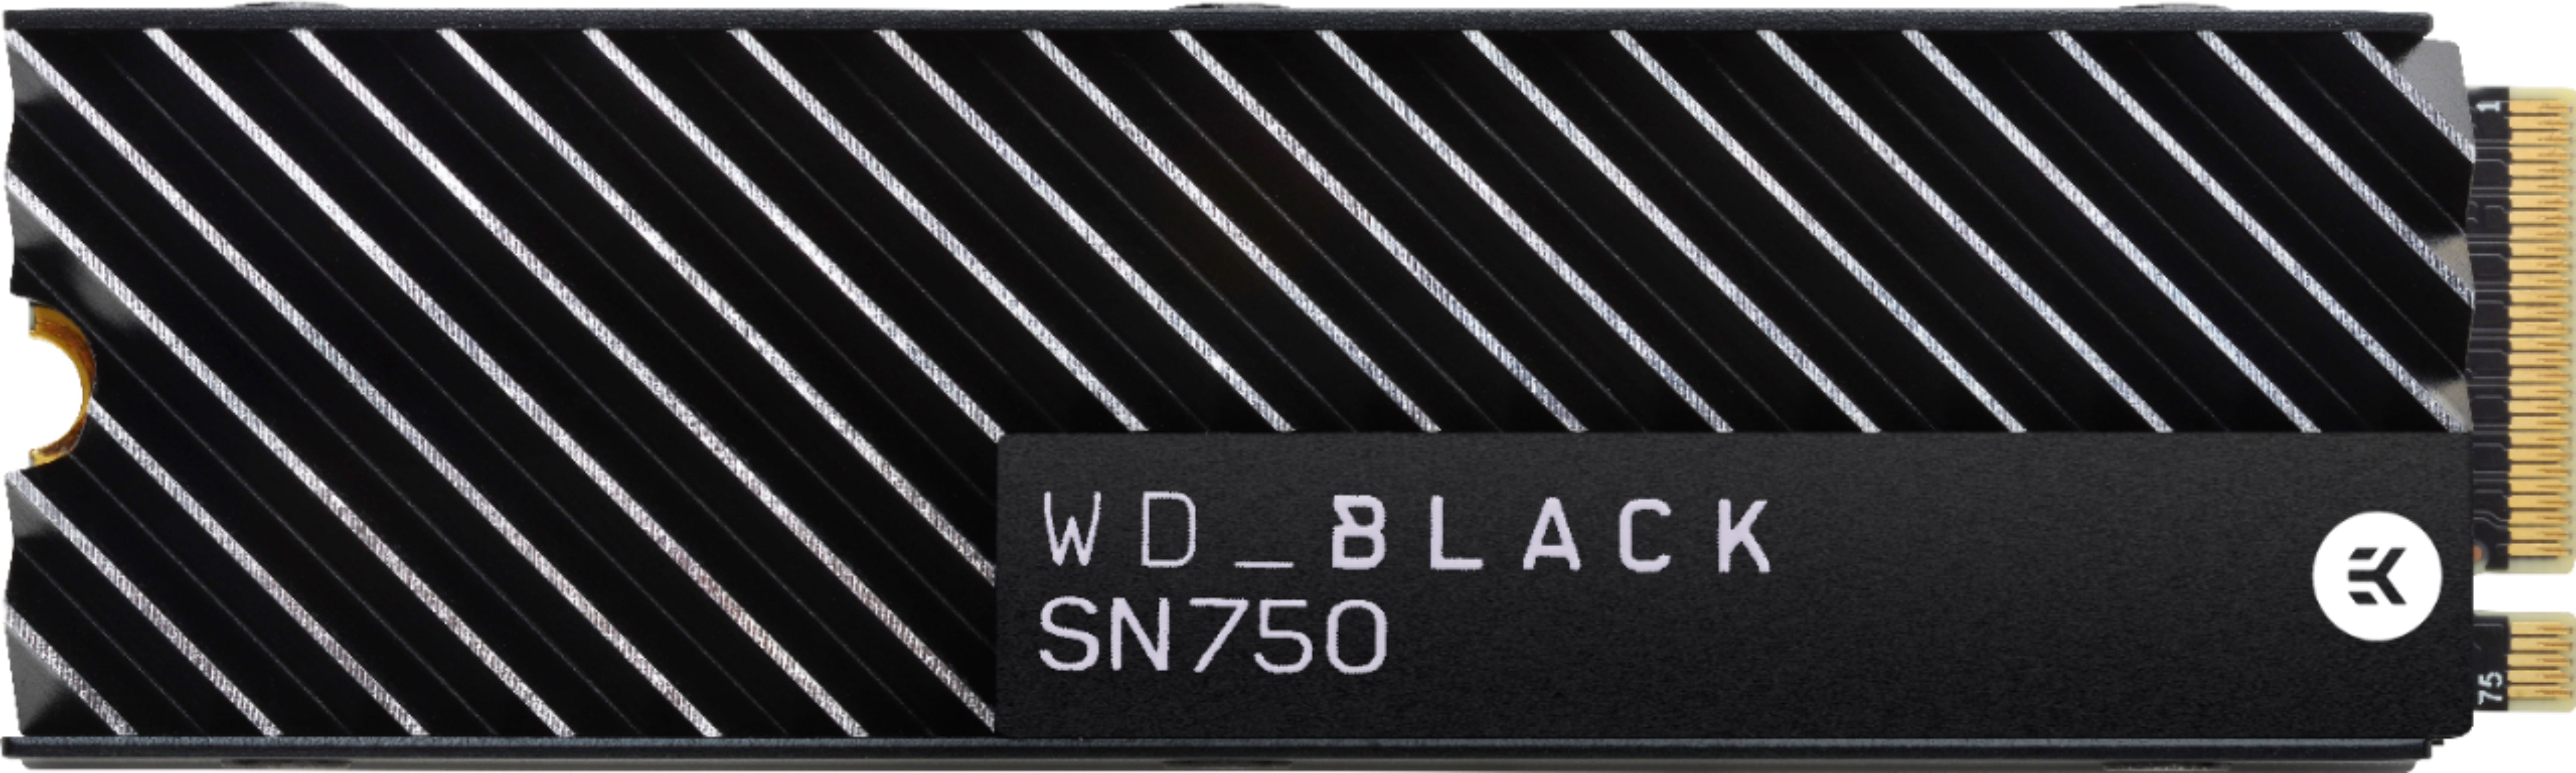 Wd Wd Black Sn750 Nvme Gaming 1tb Pcie Gen 3 X4 Internal Solid State Drive With Heatsink For Desktops Wdbgmp0010bnc Wrsn Best Buy